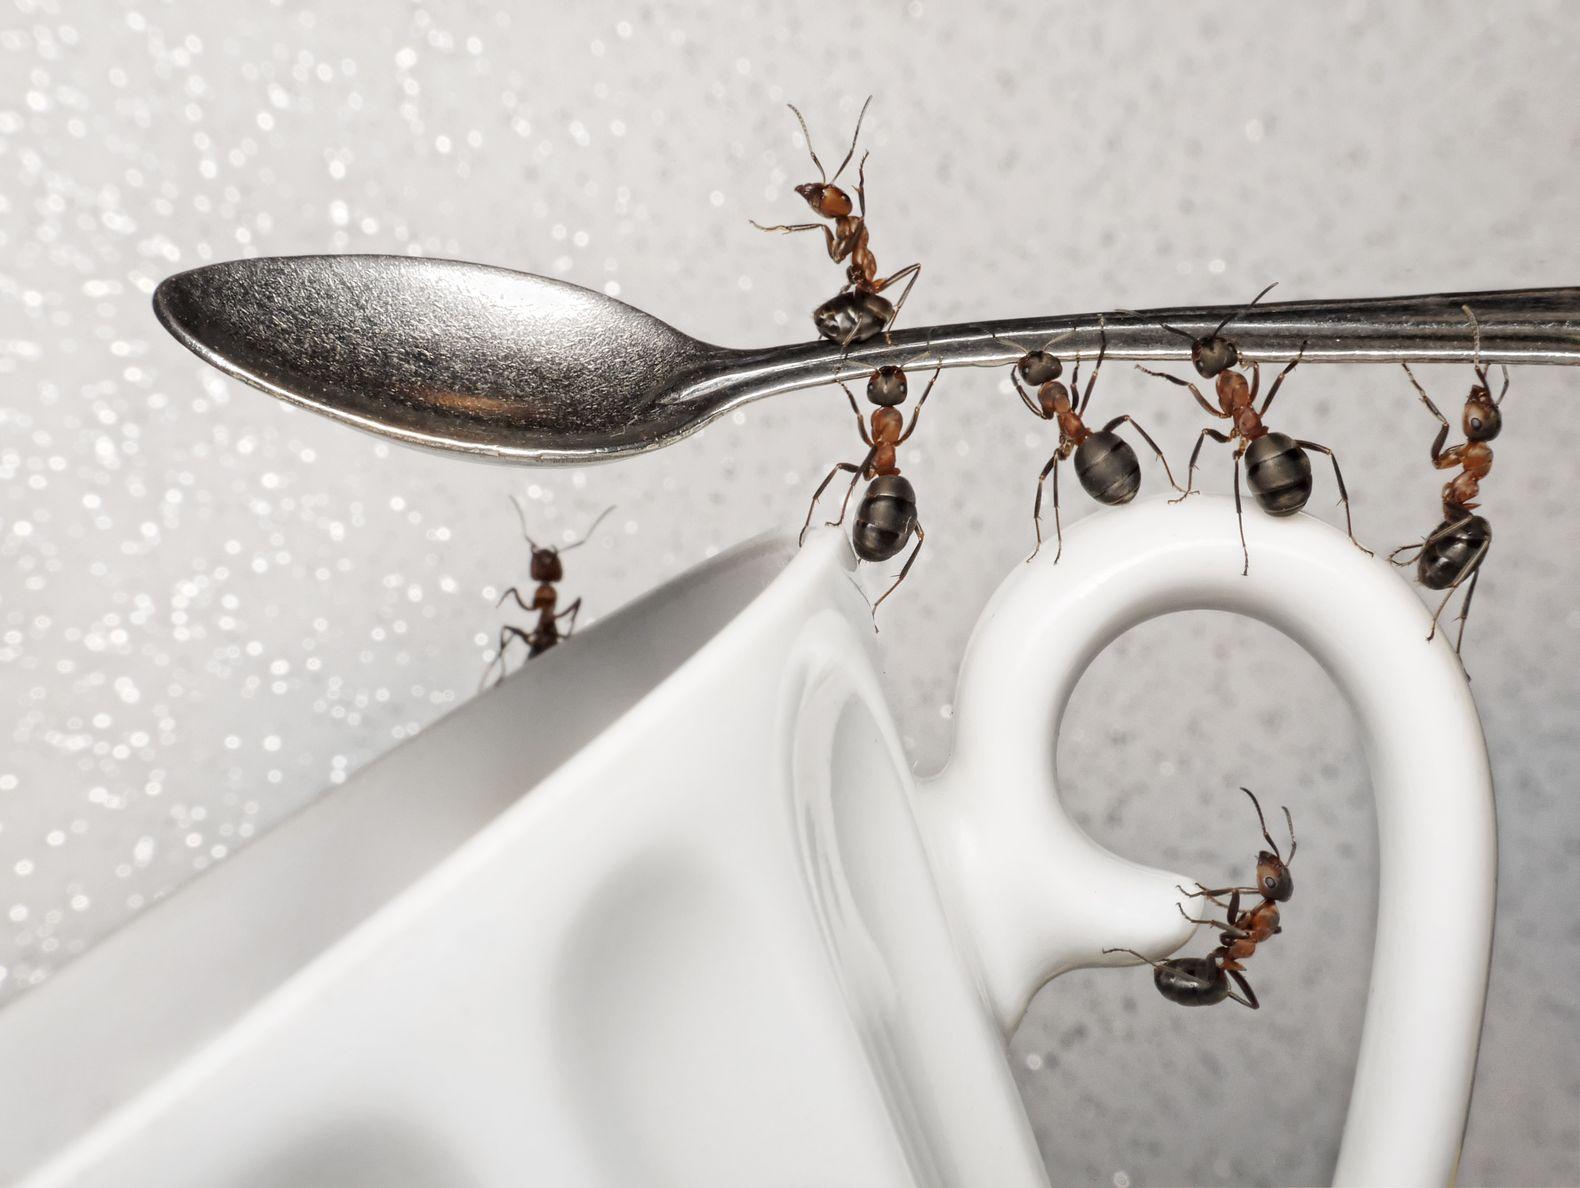 ants in kitchen sink area